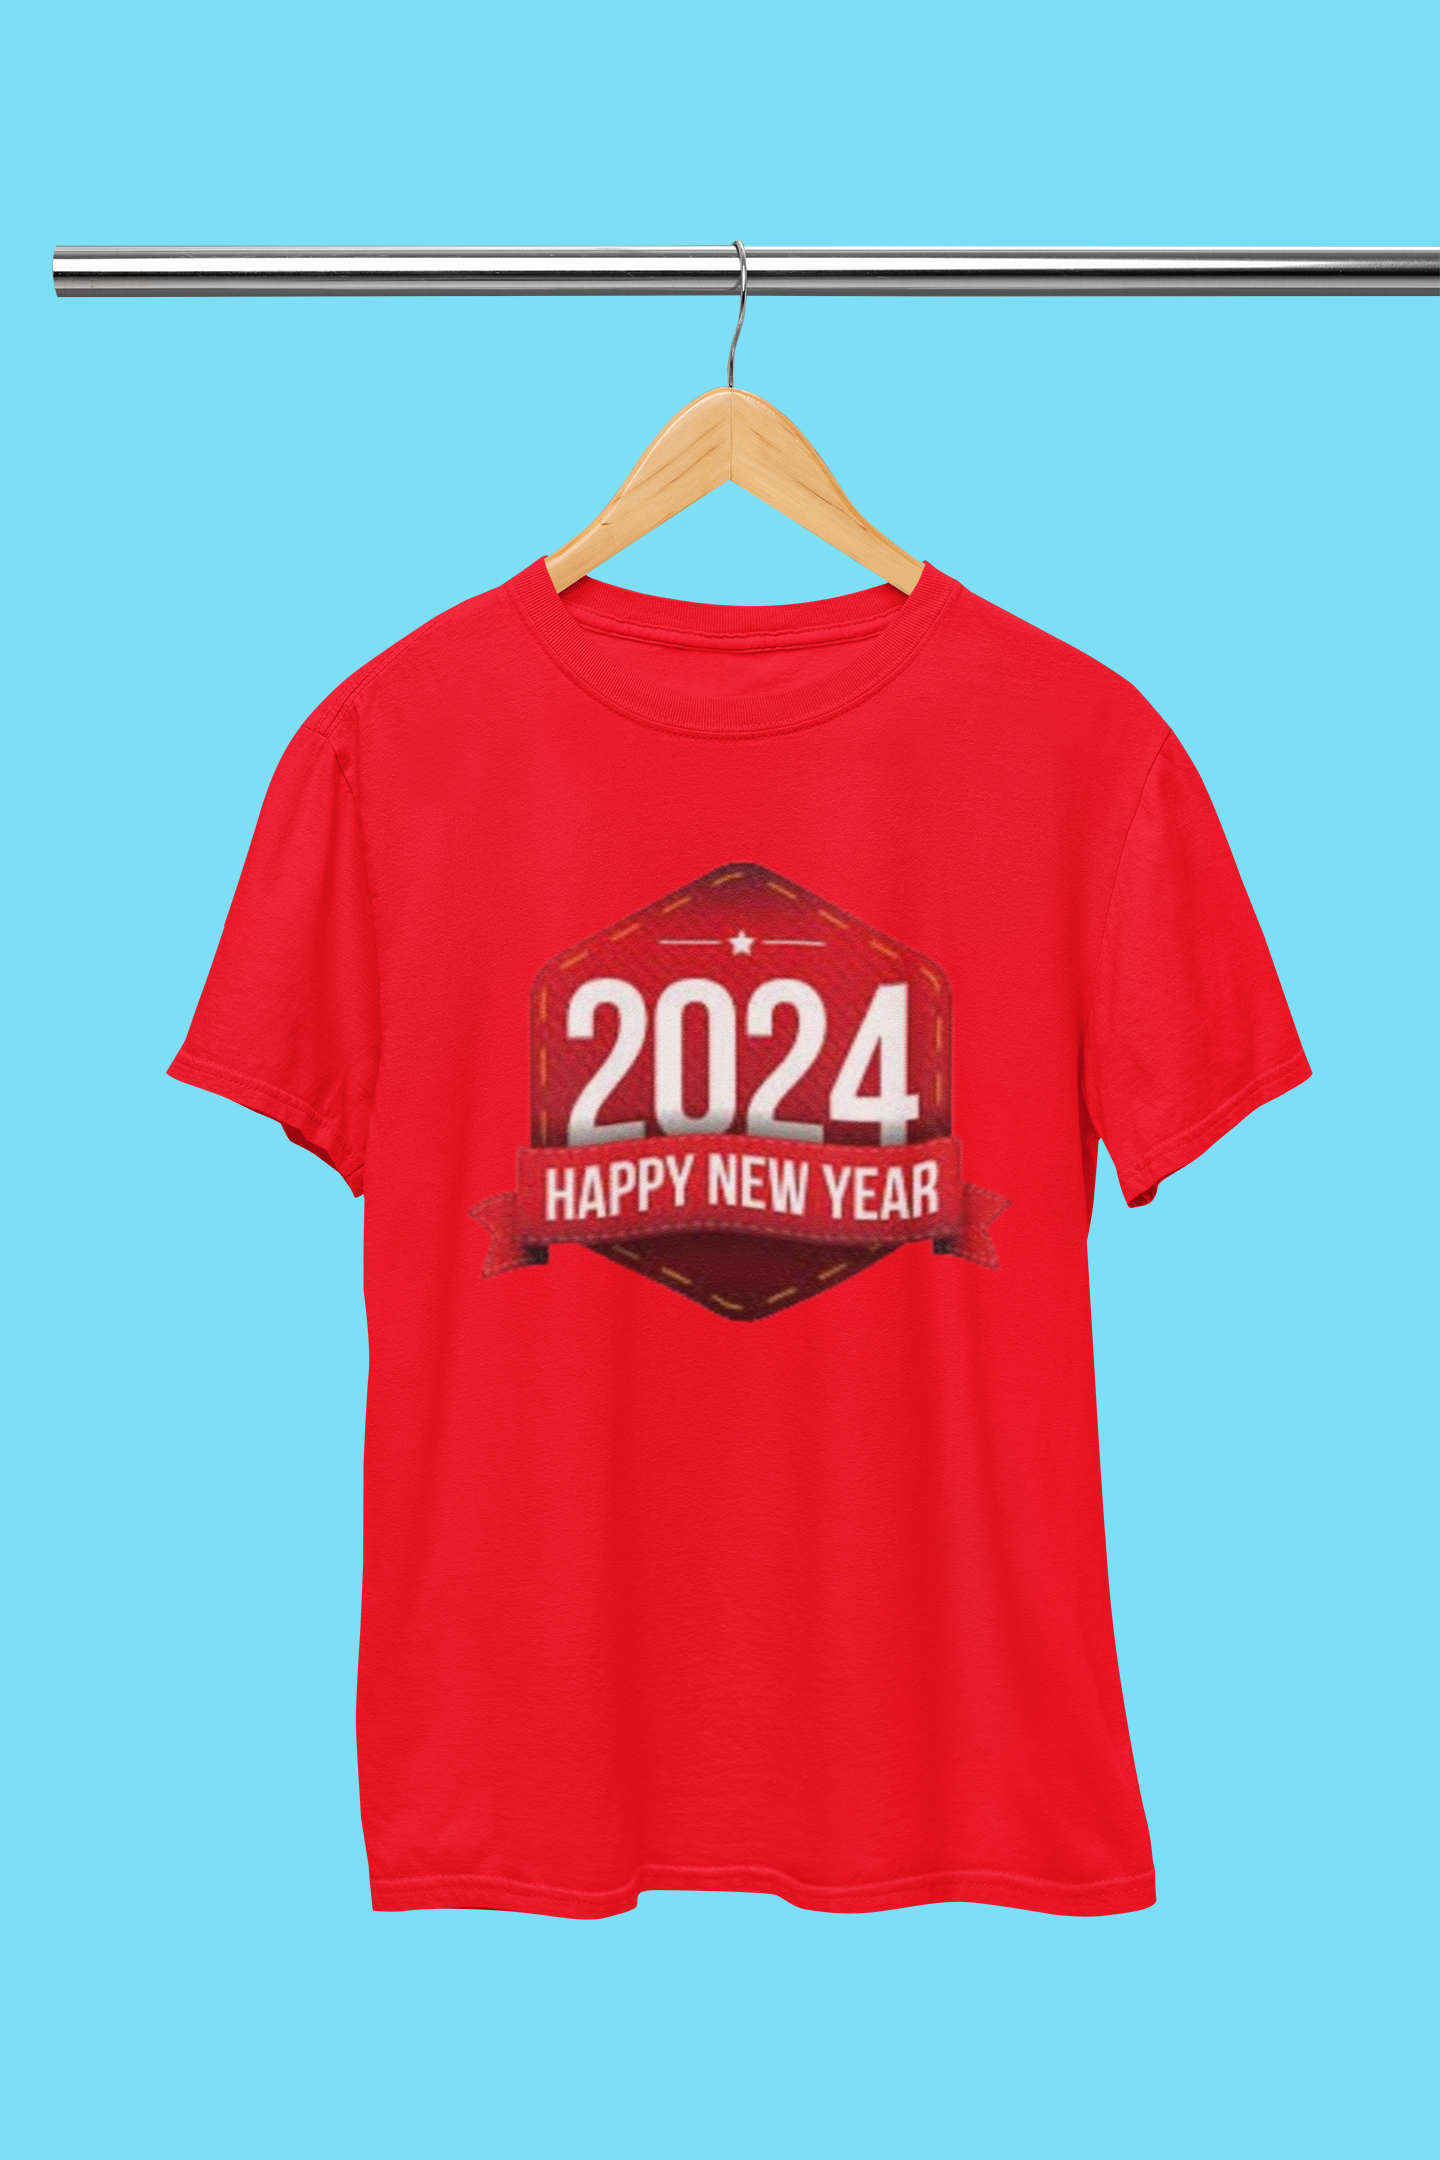 HAPPY NEW YEAR 2024 T-SHIRT